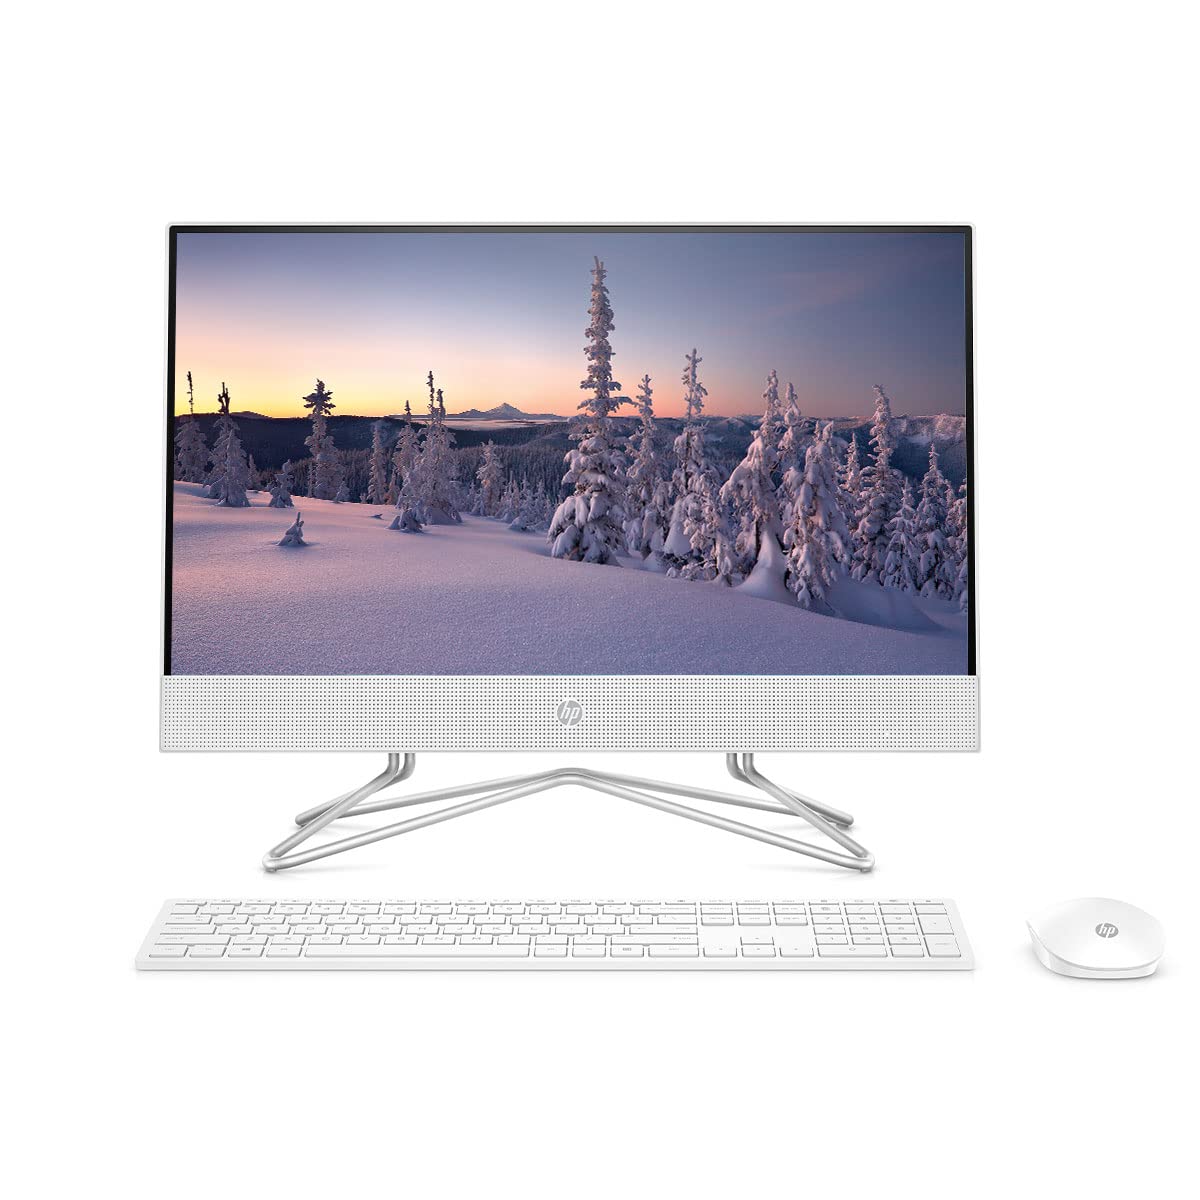 HP All-in-One Desktop PC 22-dd0302in Specs and Features ( AMD Ryzen 3 3250U / 8GB RAM/1TB HDD )